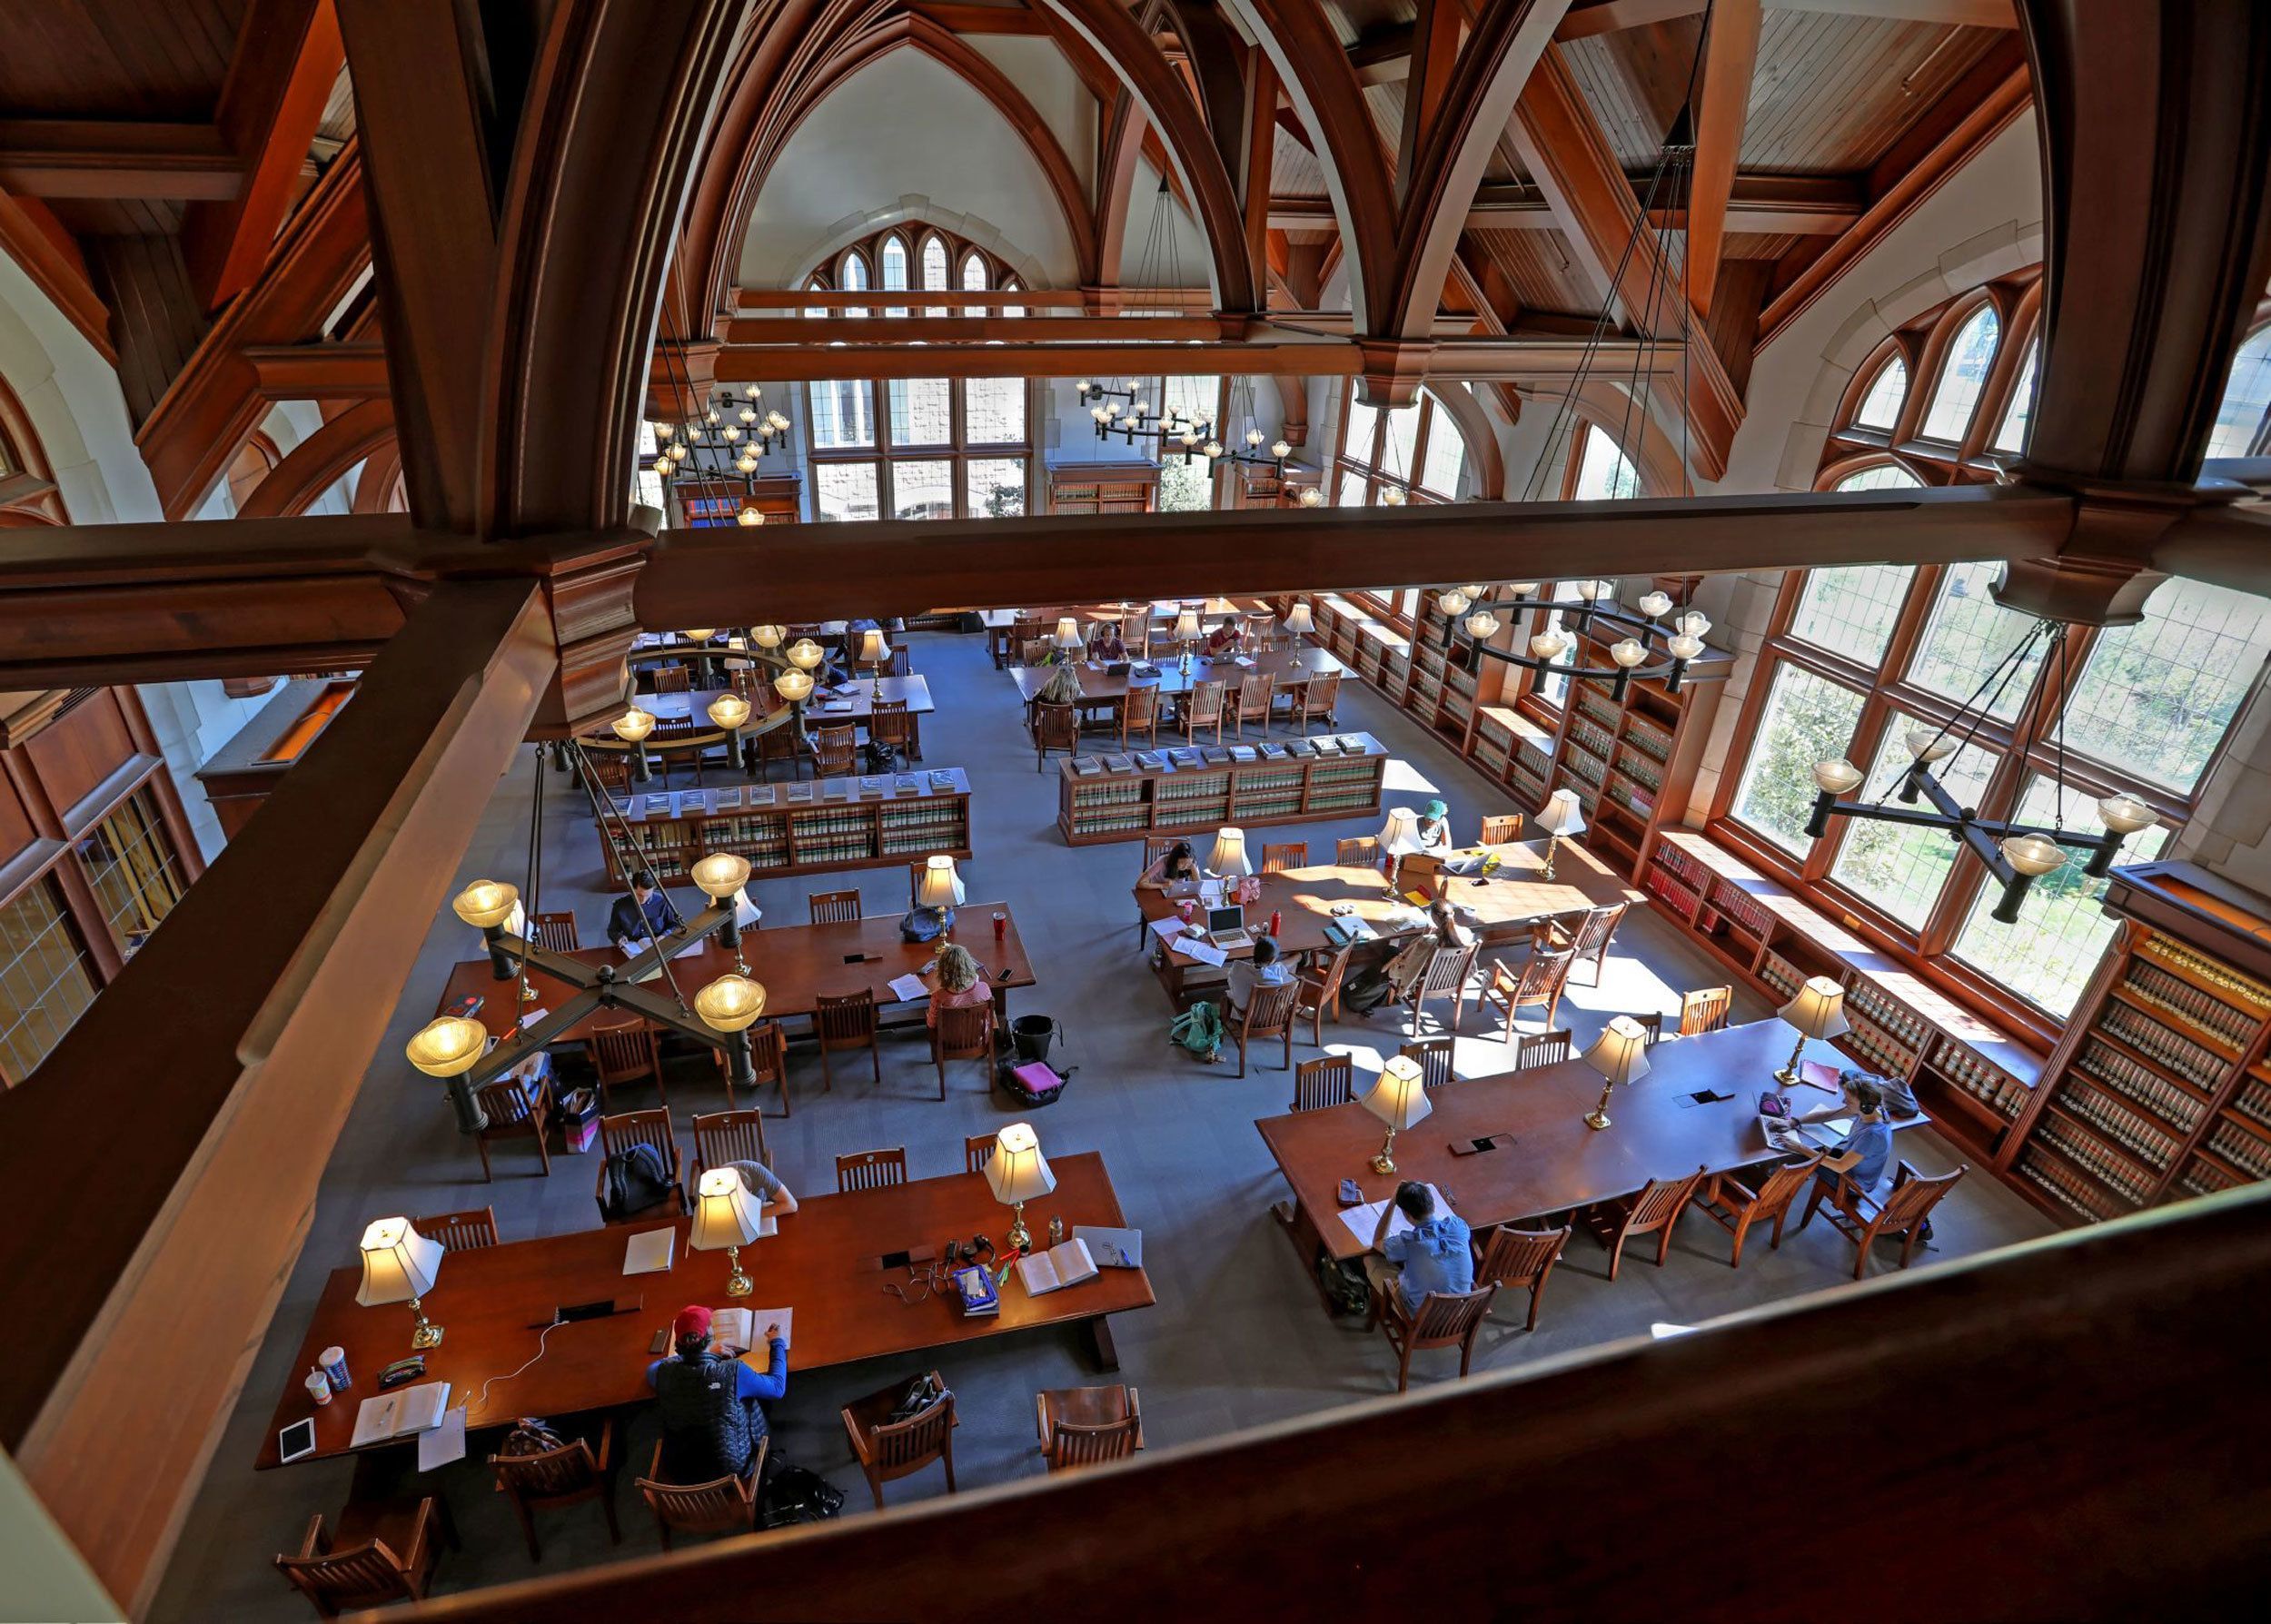 Washington University Libraries